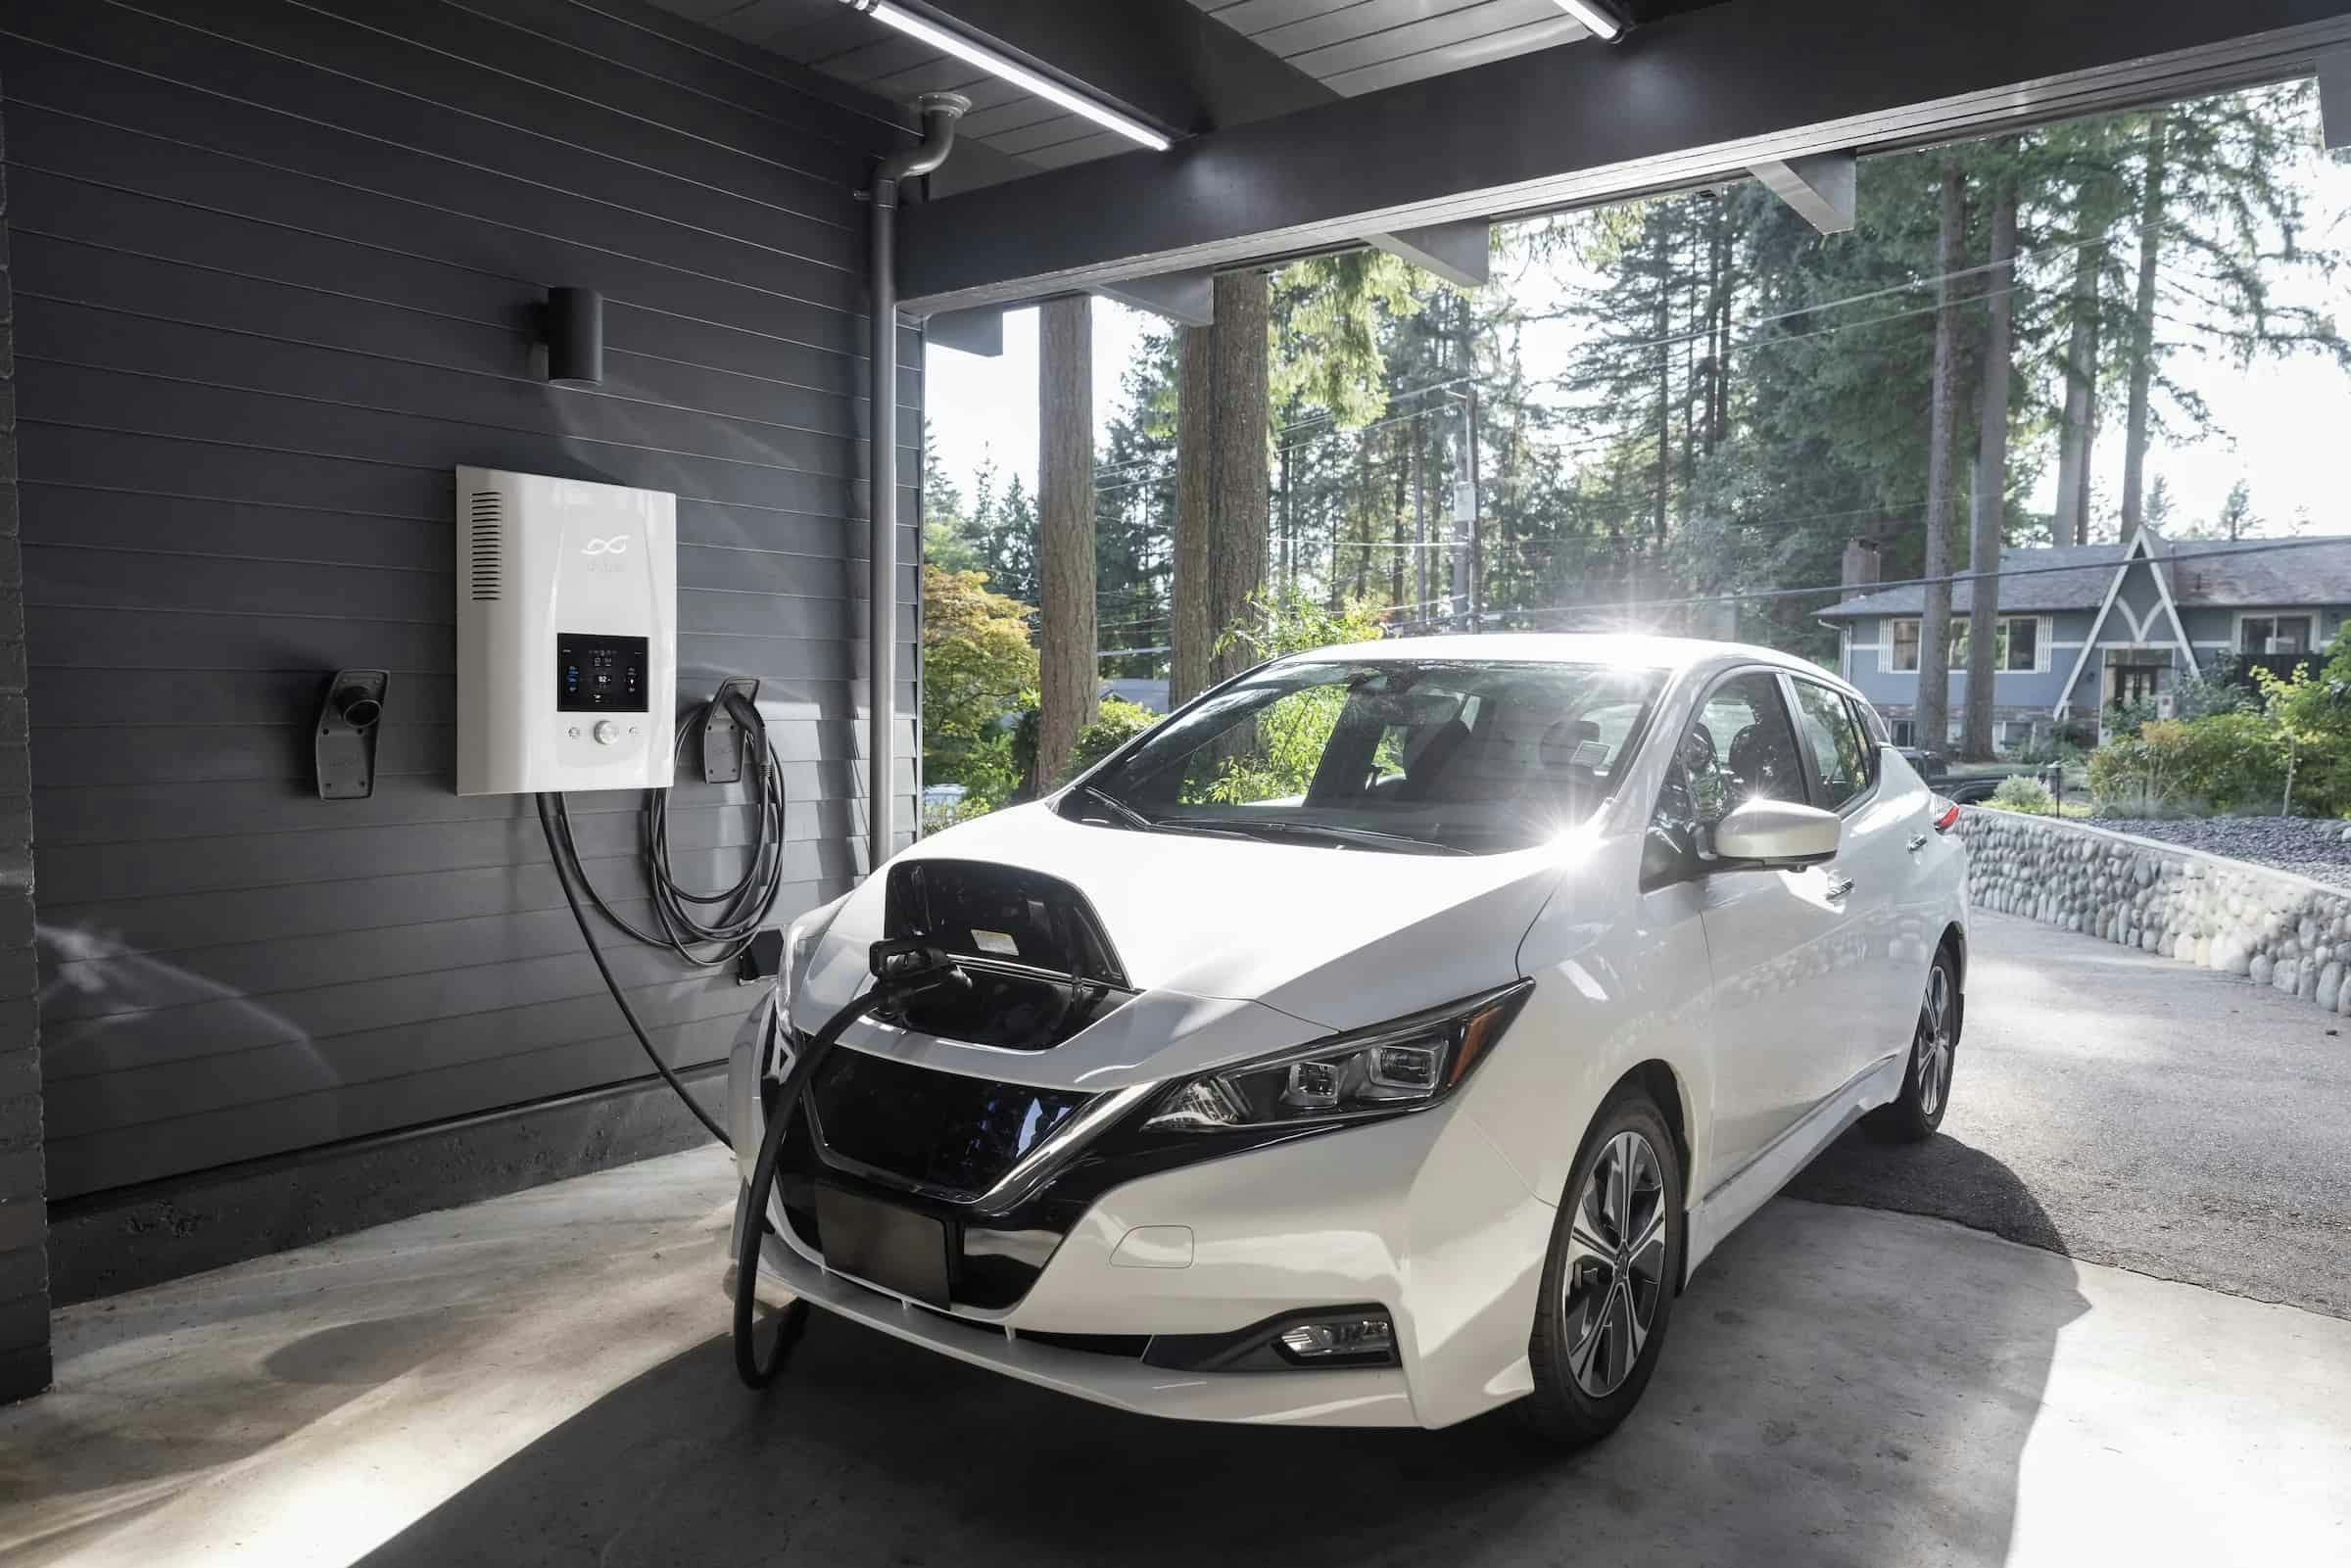 Nissan Leaf charging at home